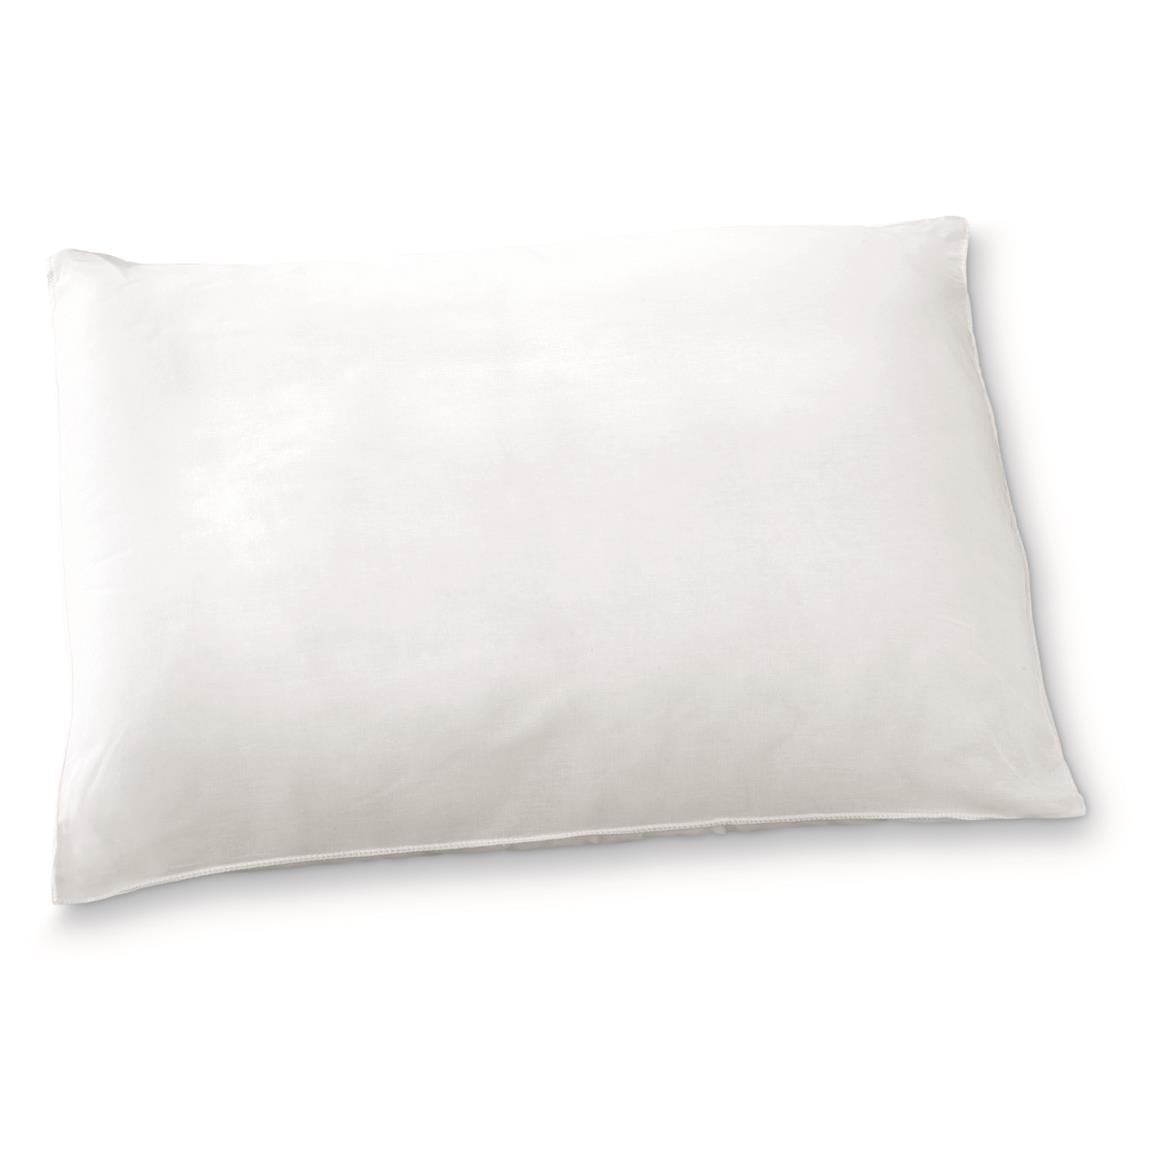 U.S. Military Surplus Polyester Fiber Pillow, 4 Pack, New